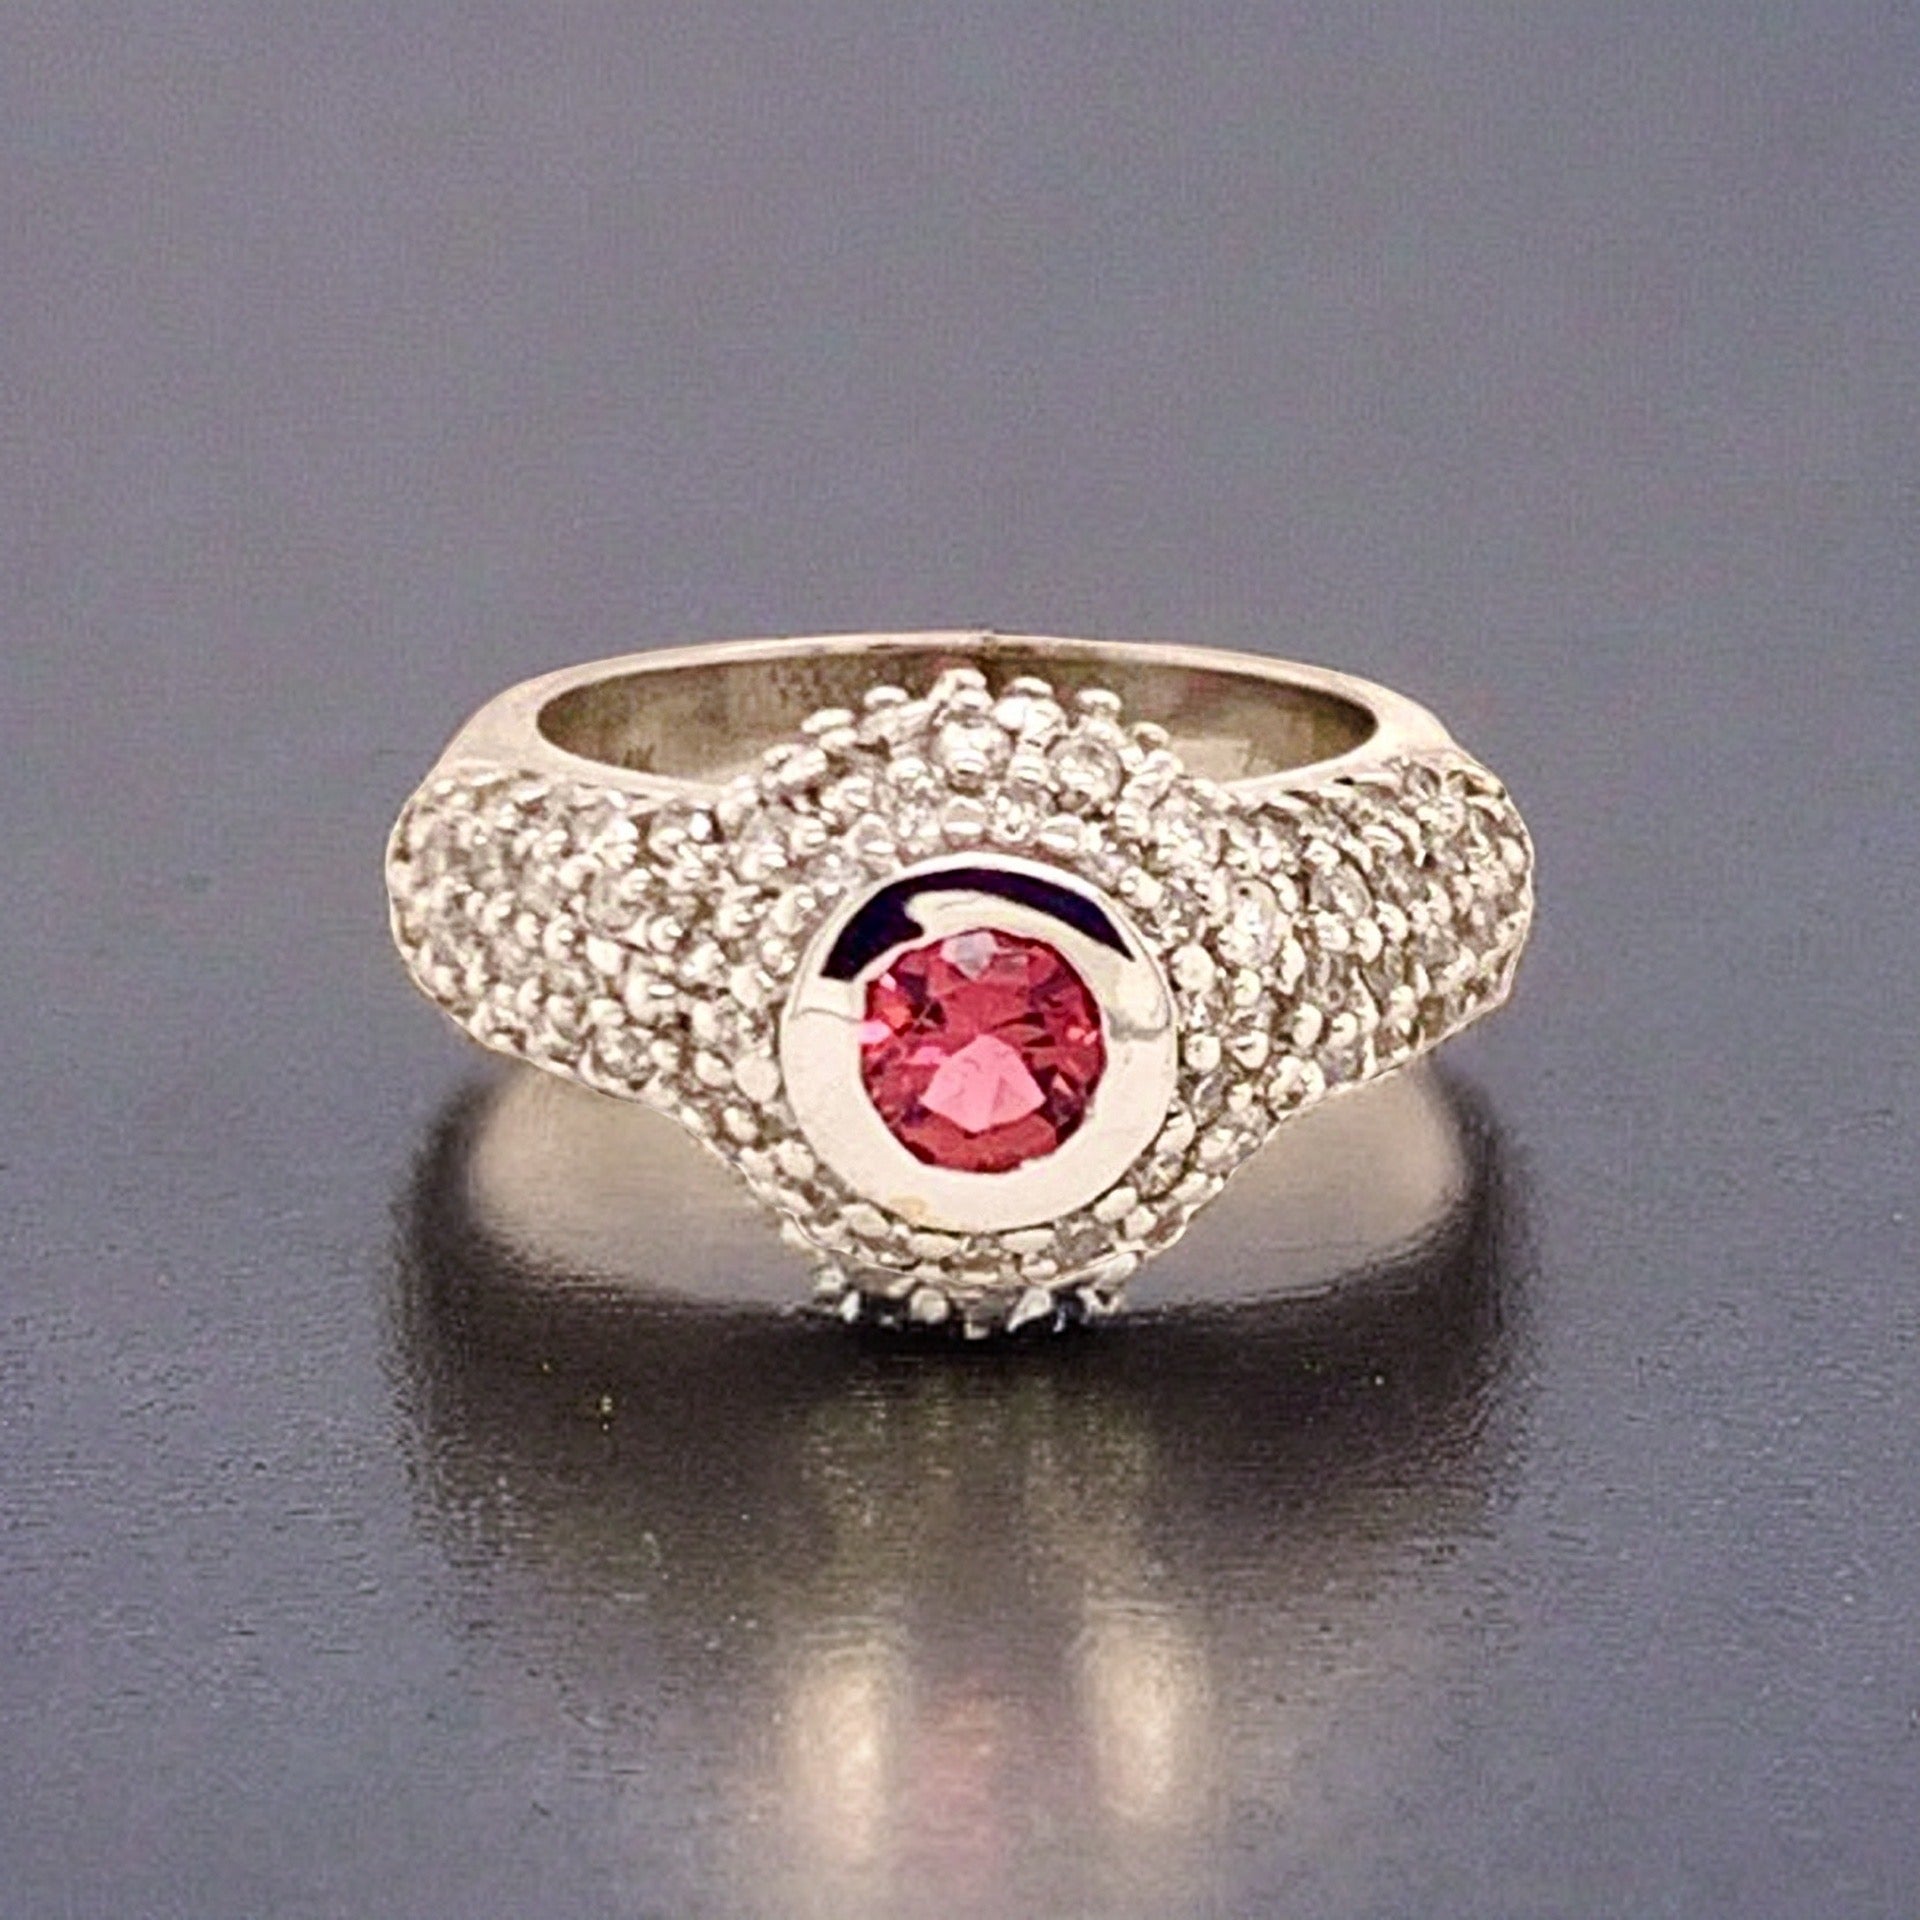 Diamond Tourmaline Ring 1.29 tcw 14k White Gold Certified $2,950 910798 - Certified Fine Jewelry